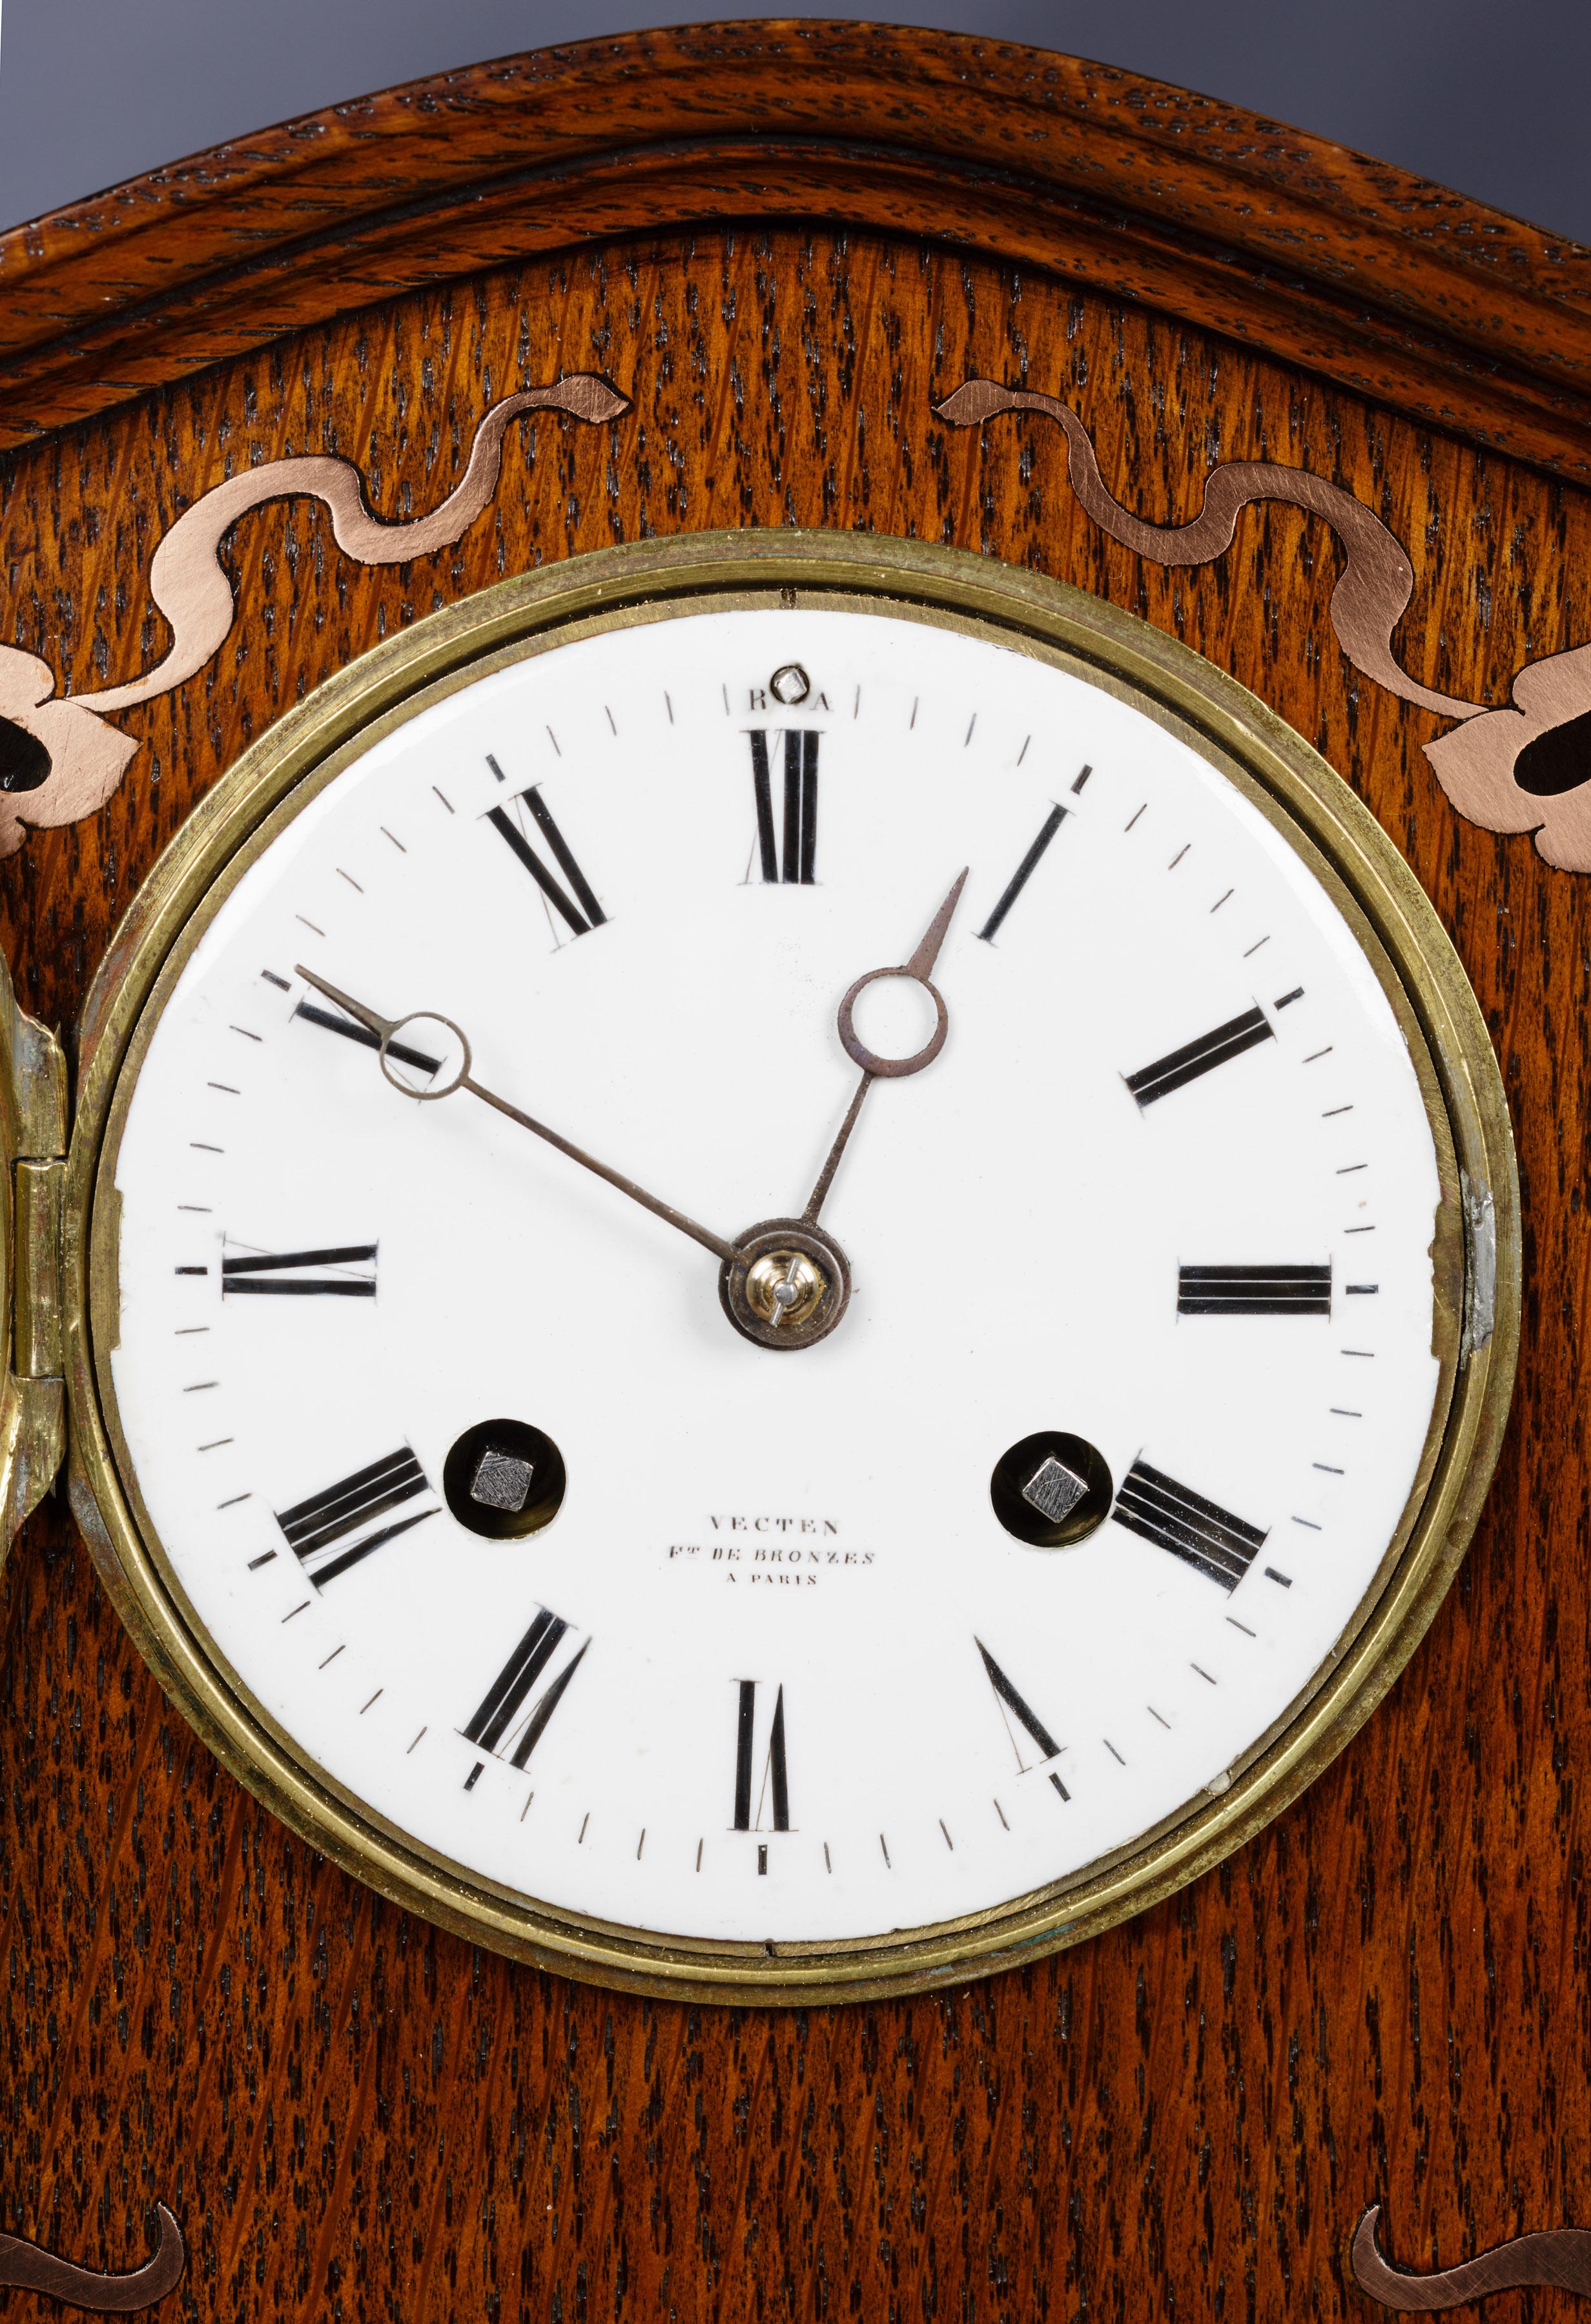 French Art Nouveau Oak Cased Mantel Clock with Copper Inlay by Vecten, Paris